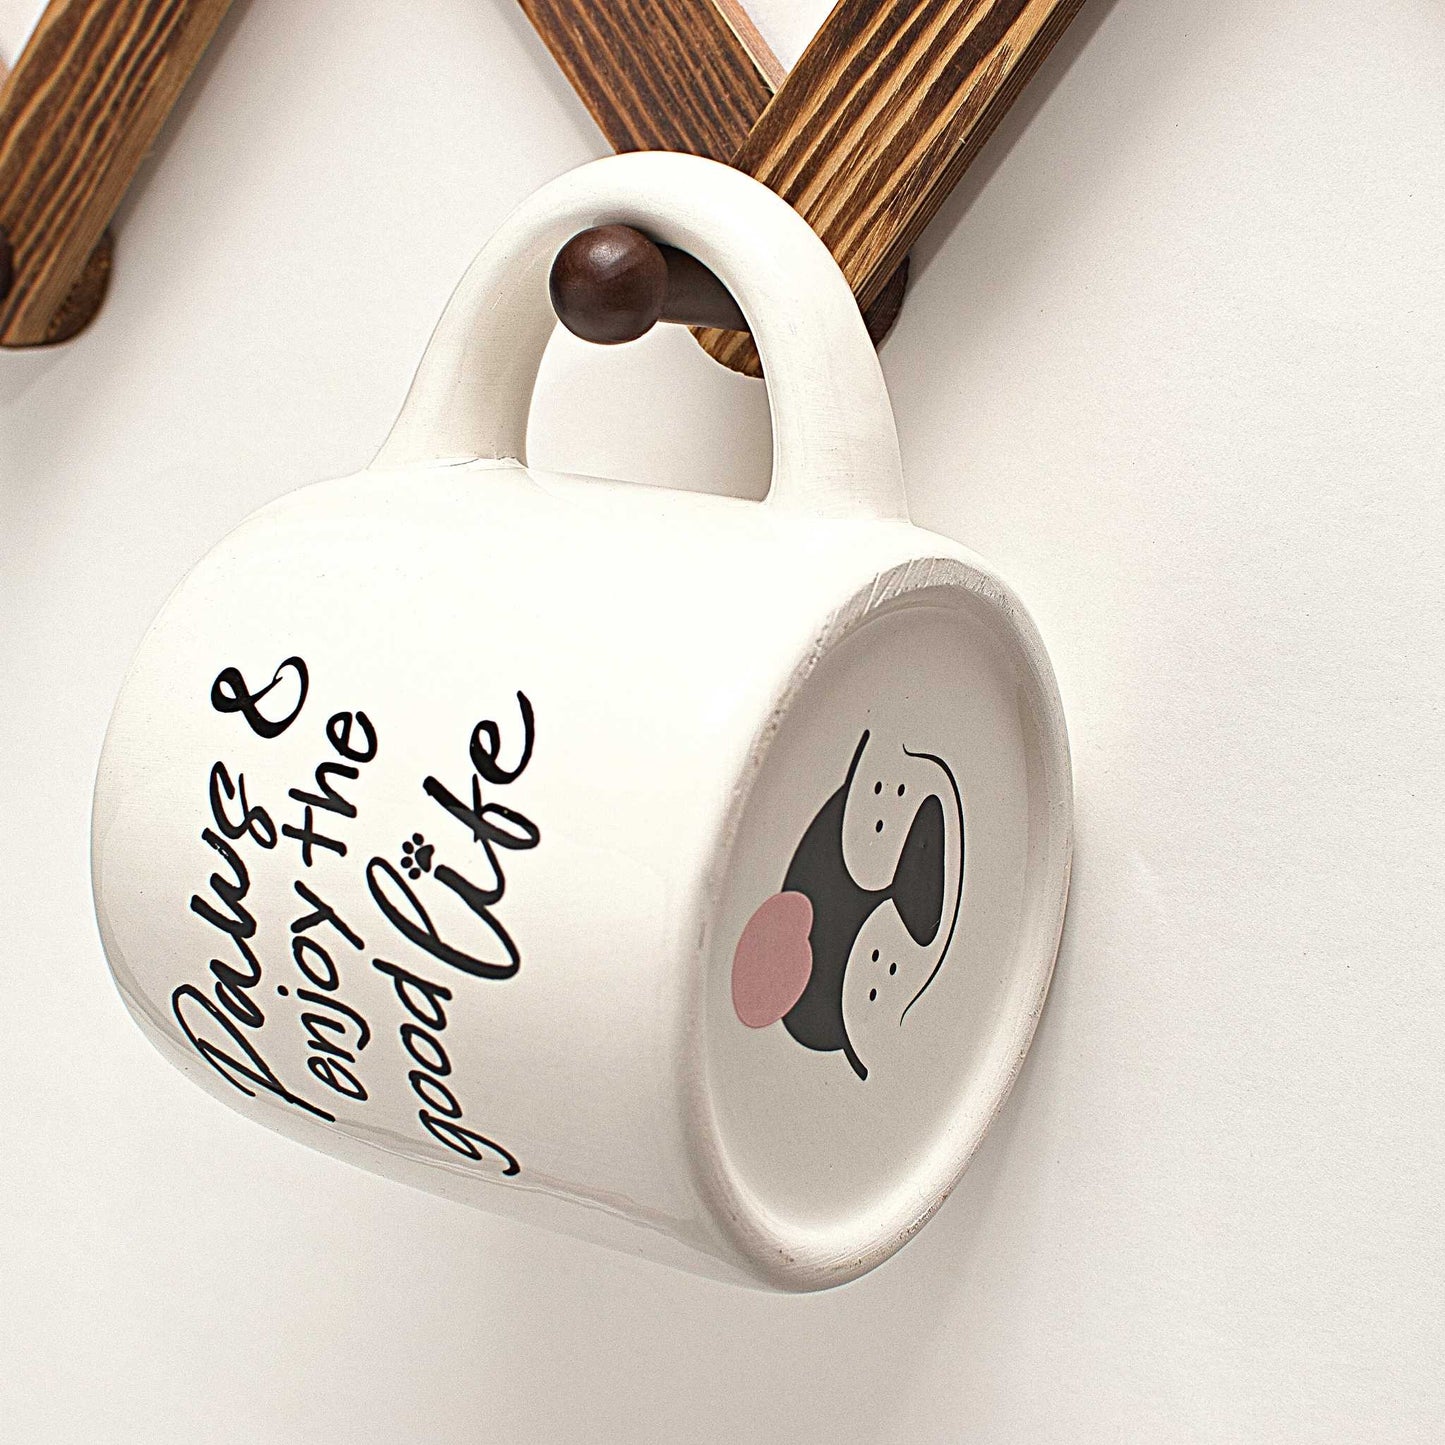 Drinkware Mug - Paws & Enjoy The Good Life Large Ceramic Mug WAM-21312-PAWS